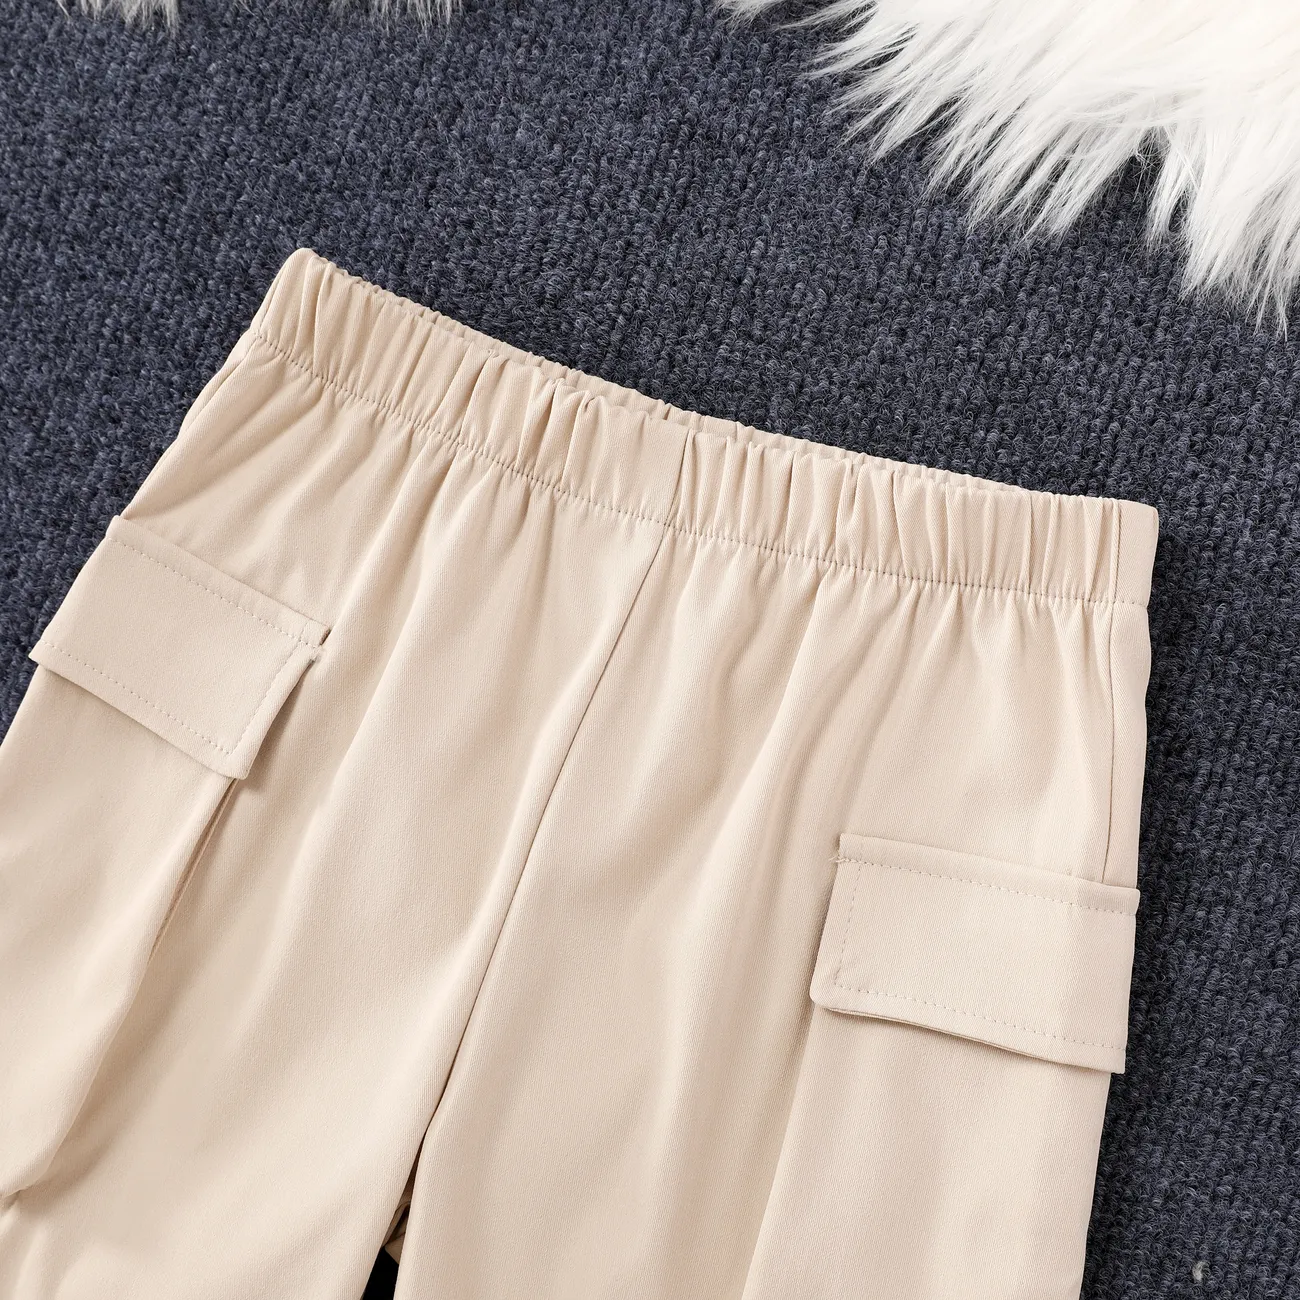 Kid Boy Solid Color Casual Shorts with Pockets  Khaki big image 1